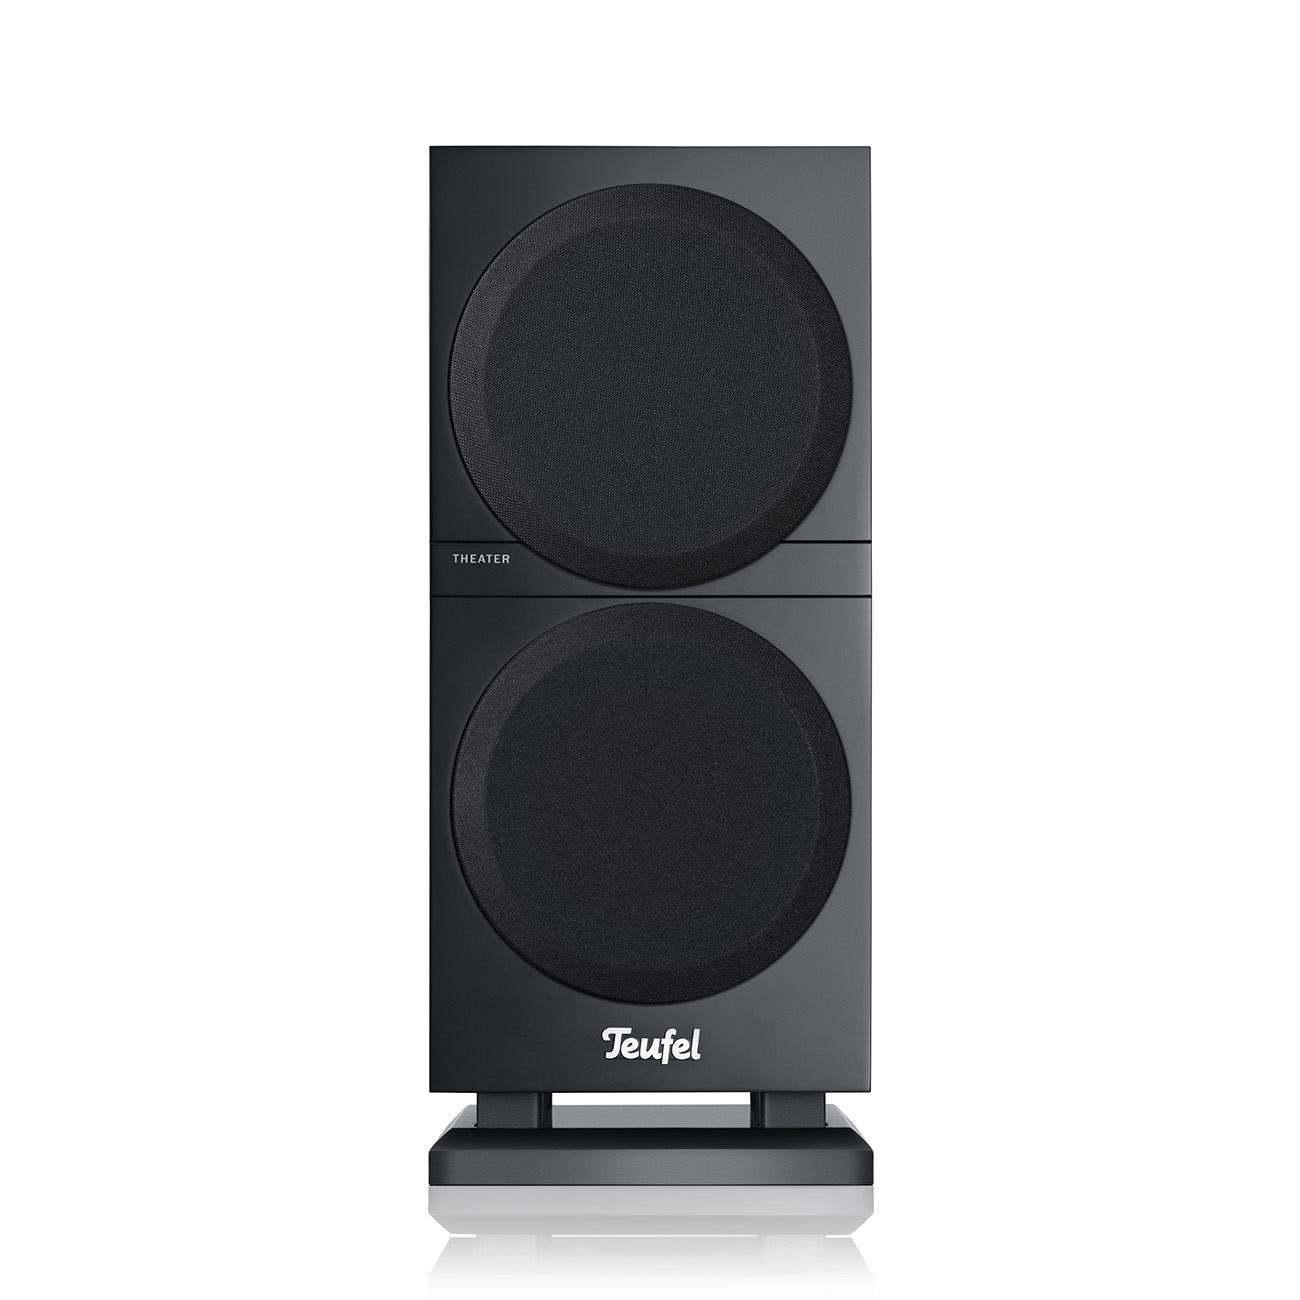 TEUFEL Stereo-Regallautsprecher THEATER Schwarz 500S Passiv-Lautsprecher,